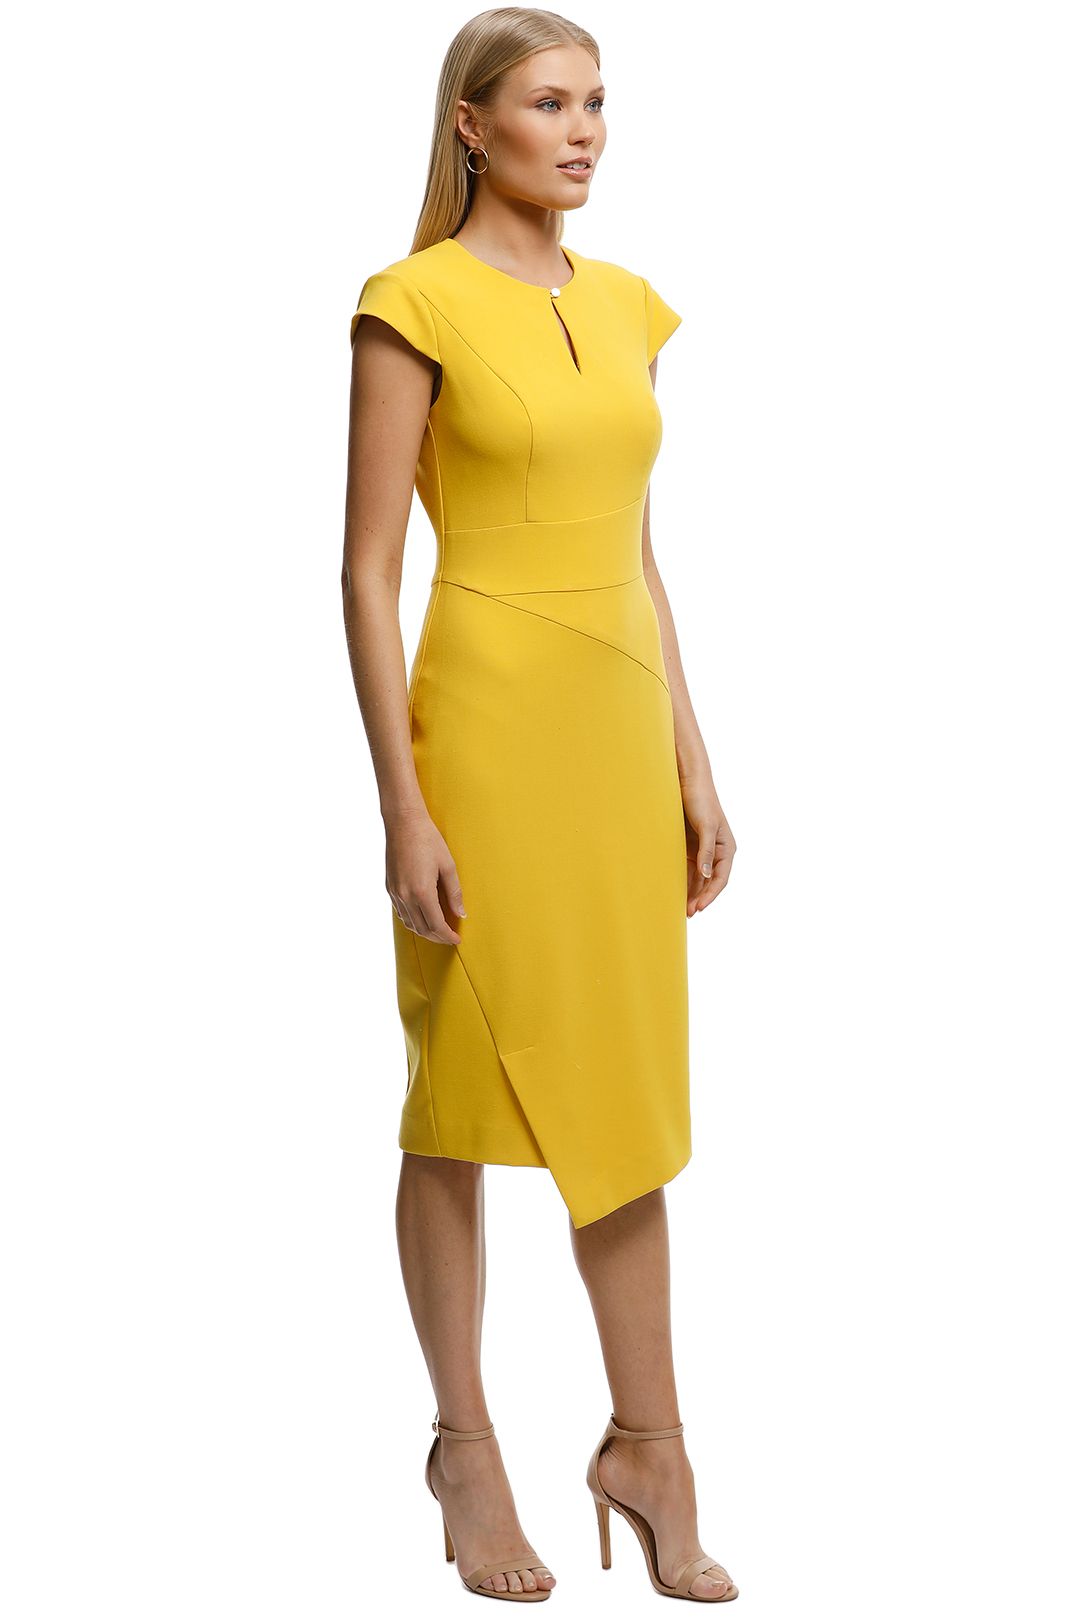 CUE-Mustard-Asymmetric-Pencil-Dress-Mustard-Side